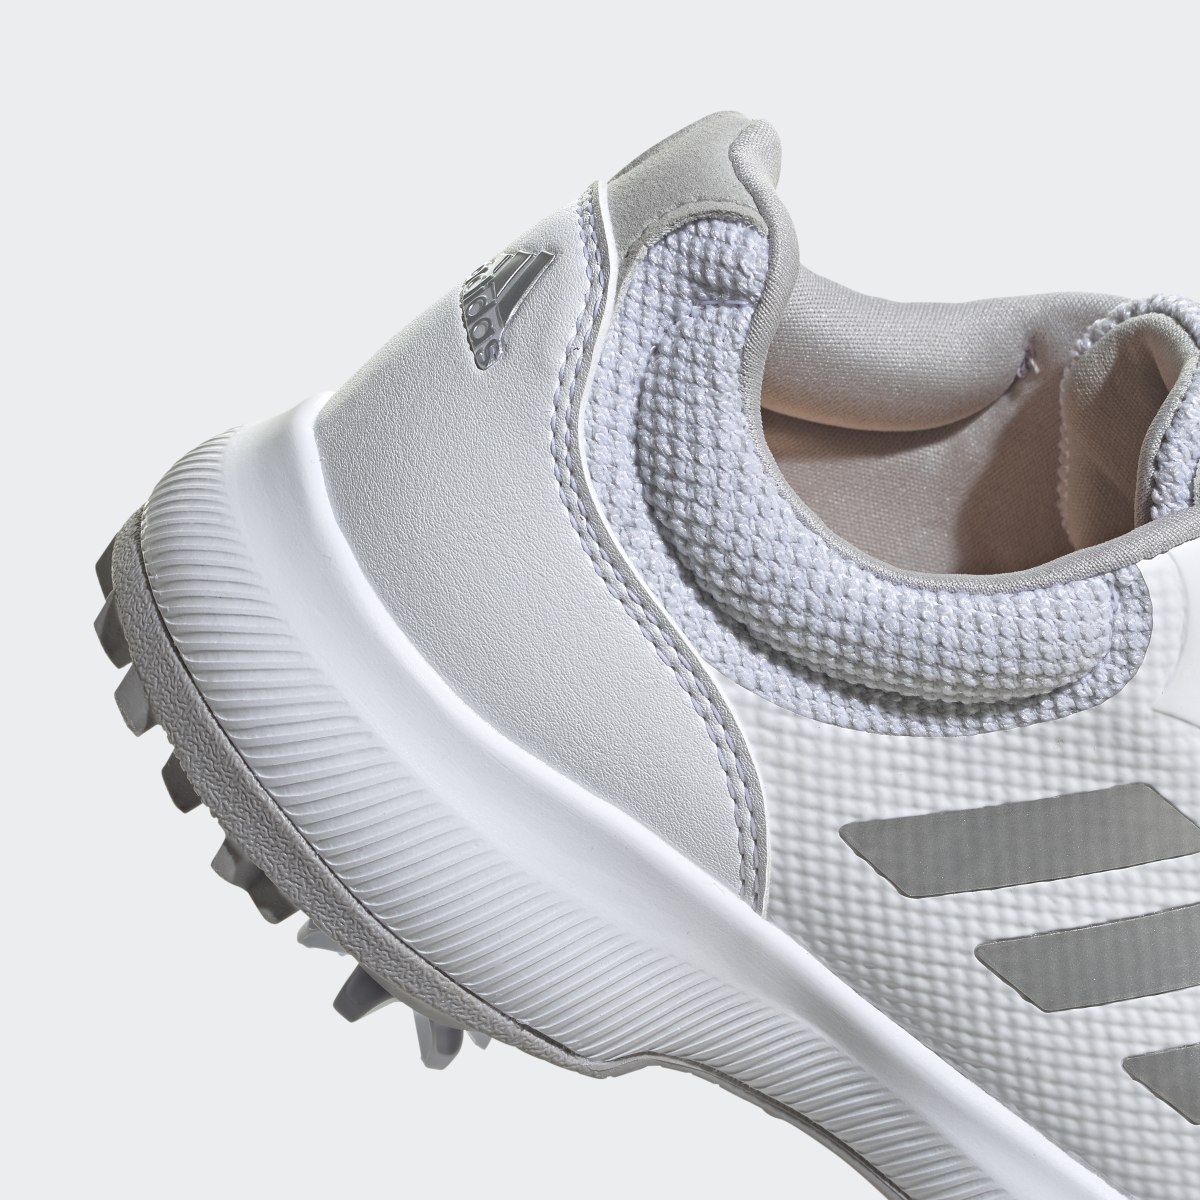 Adidas Tech Response 2.0 Golf Shoes. 10